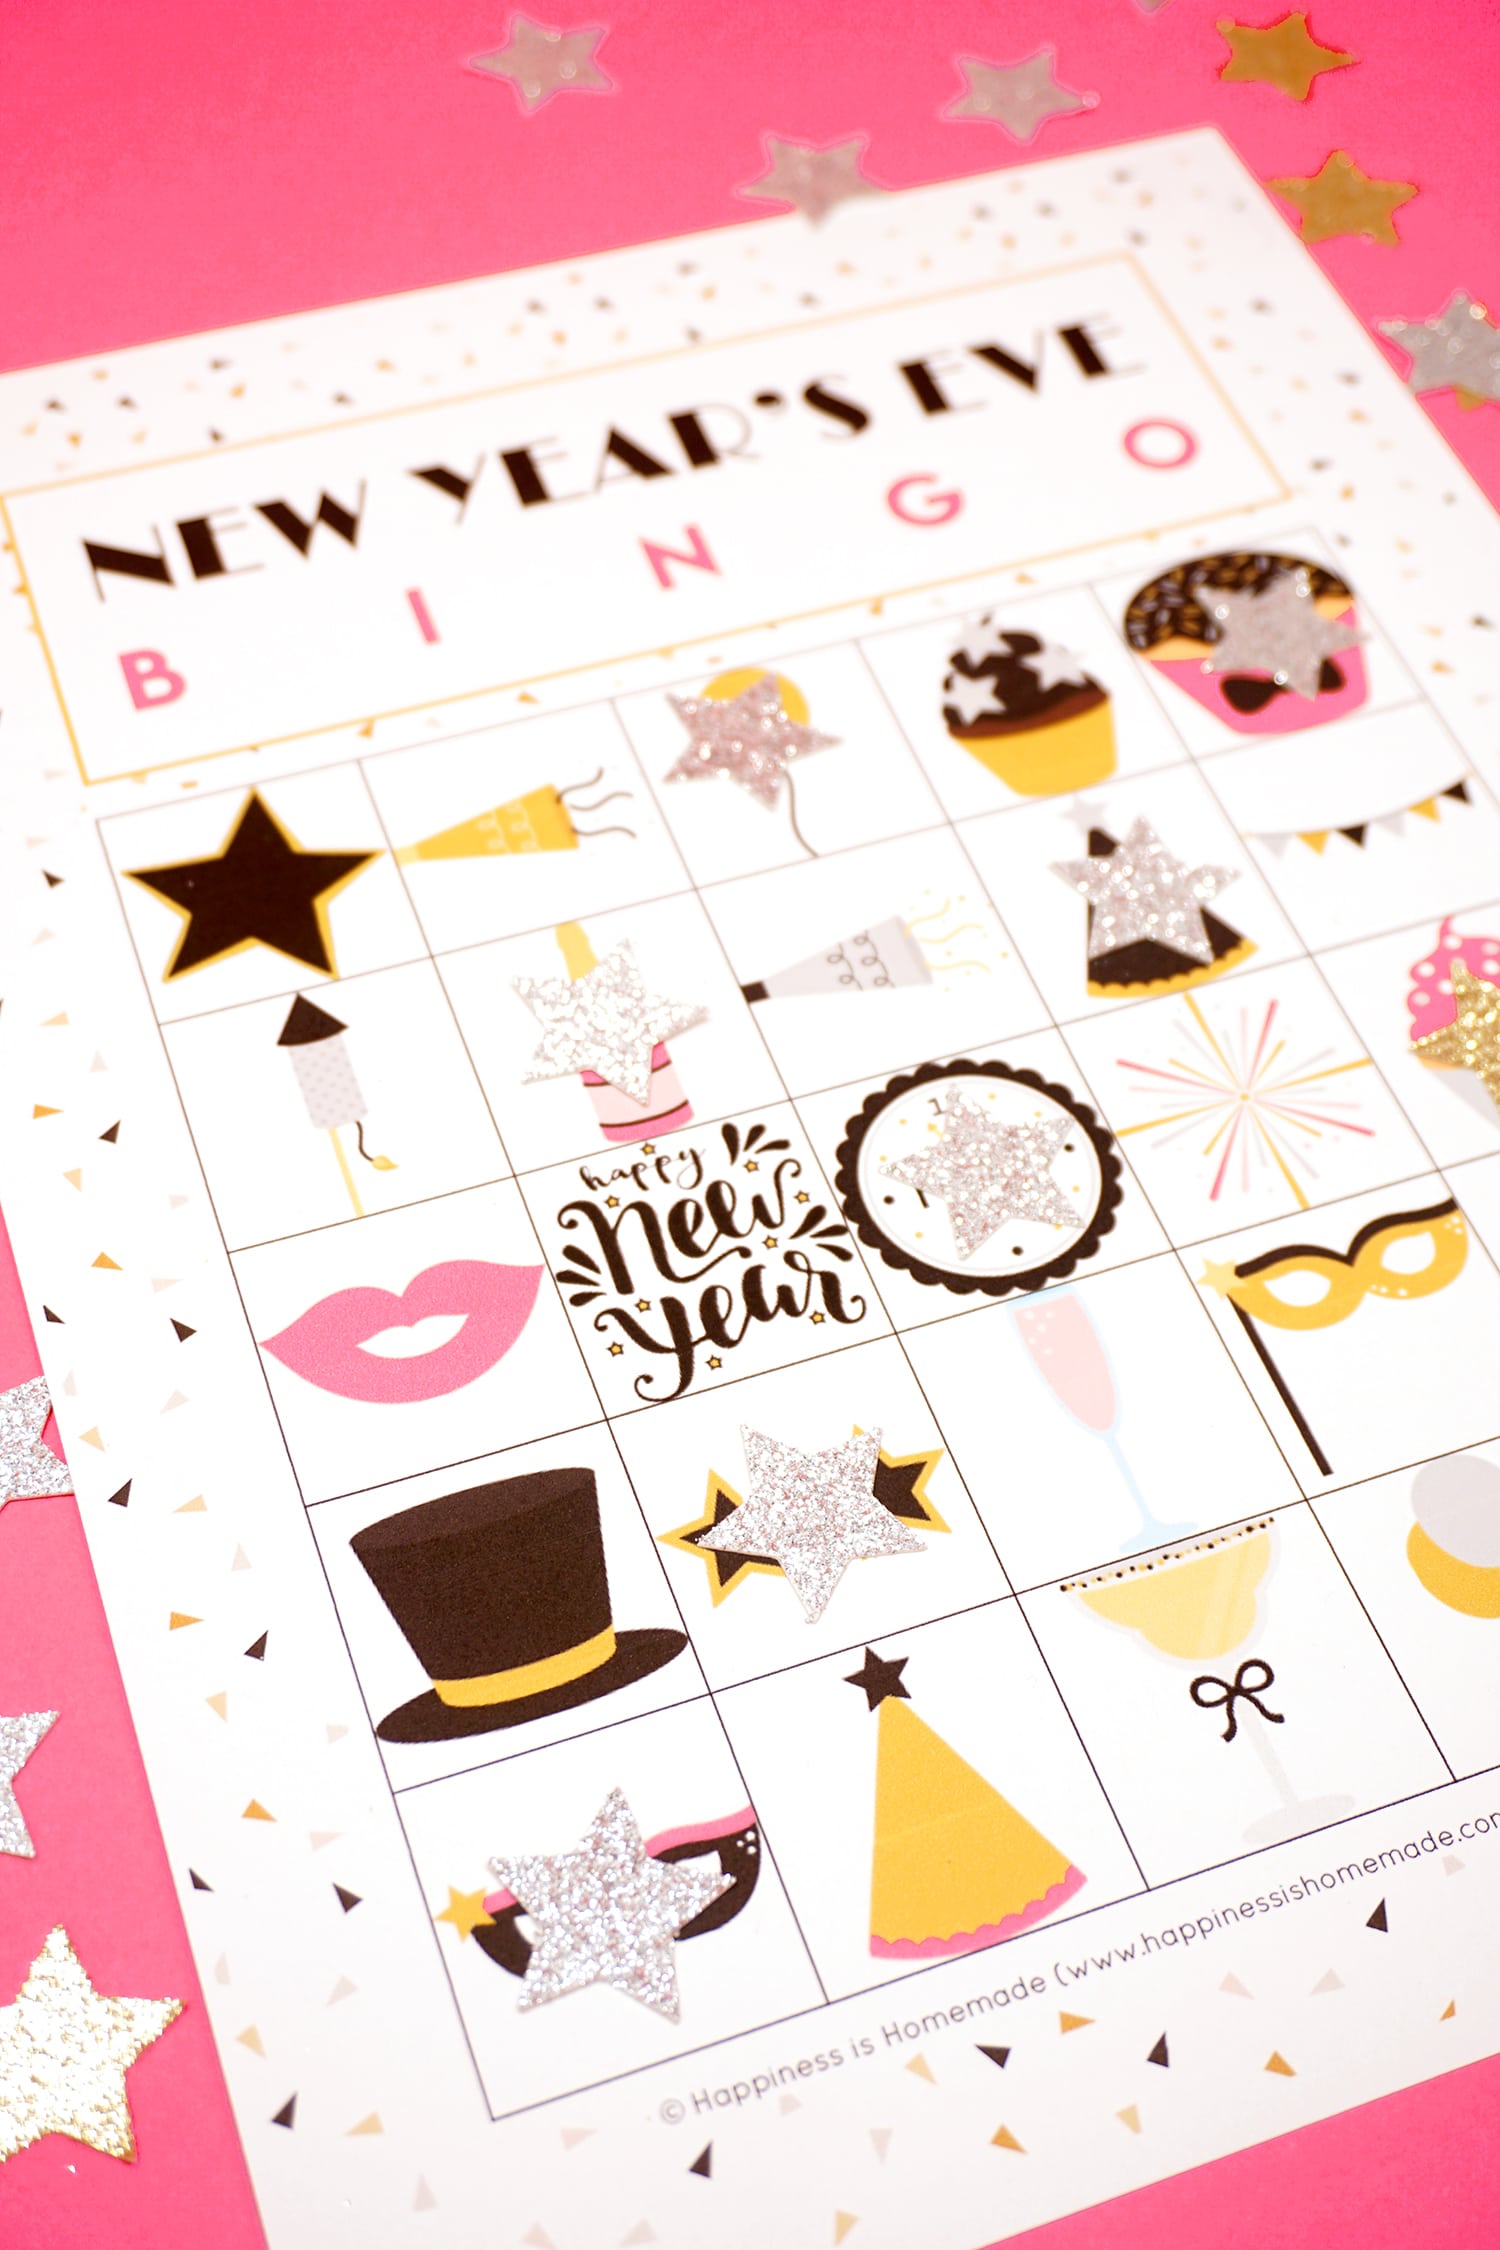 new years eve bingo game card printable